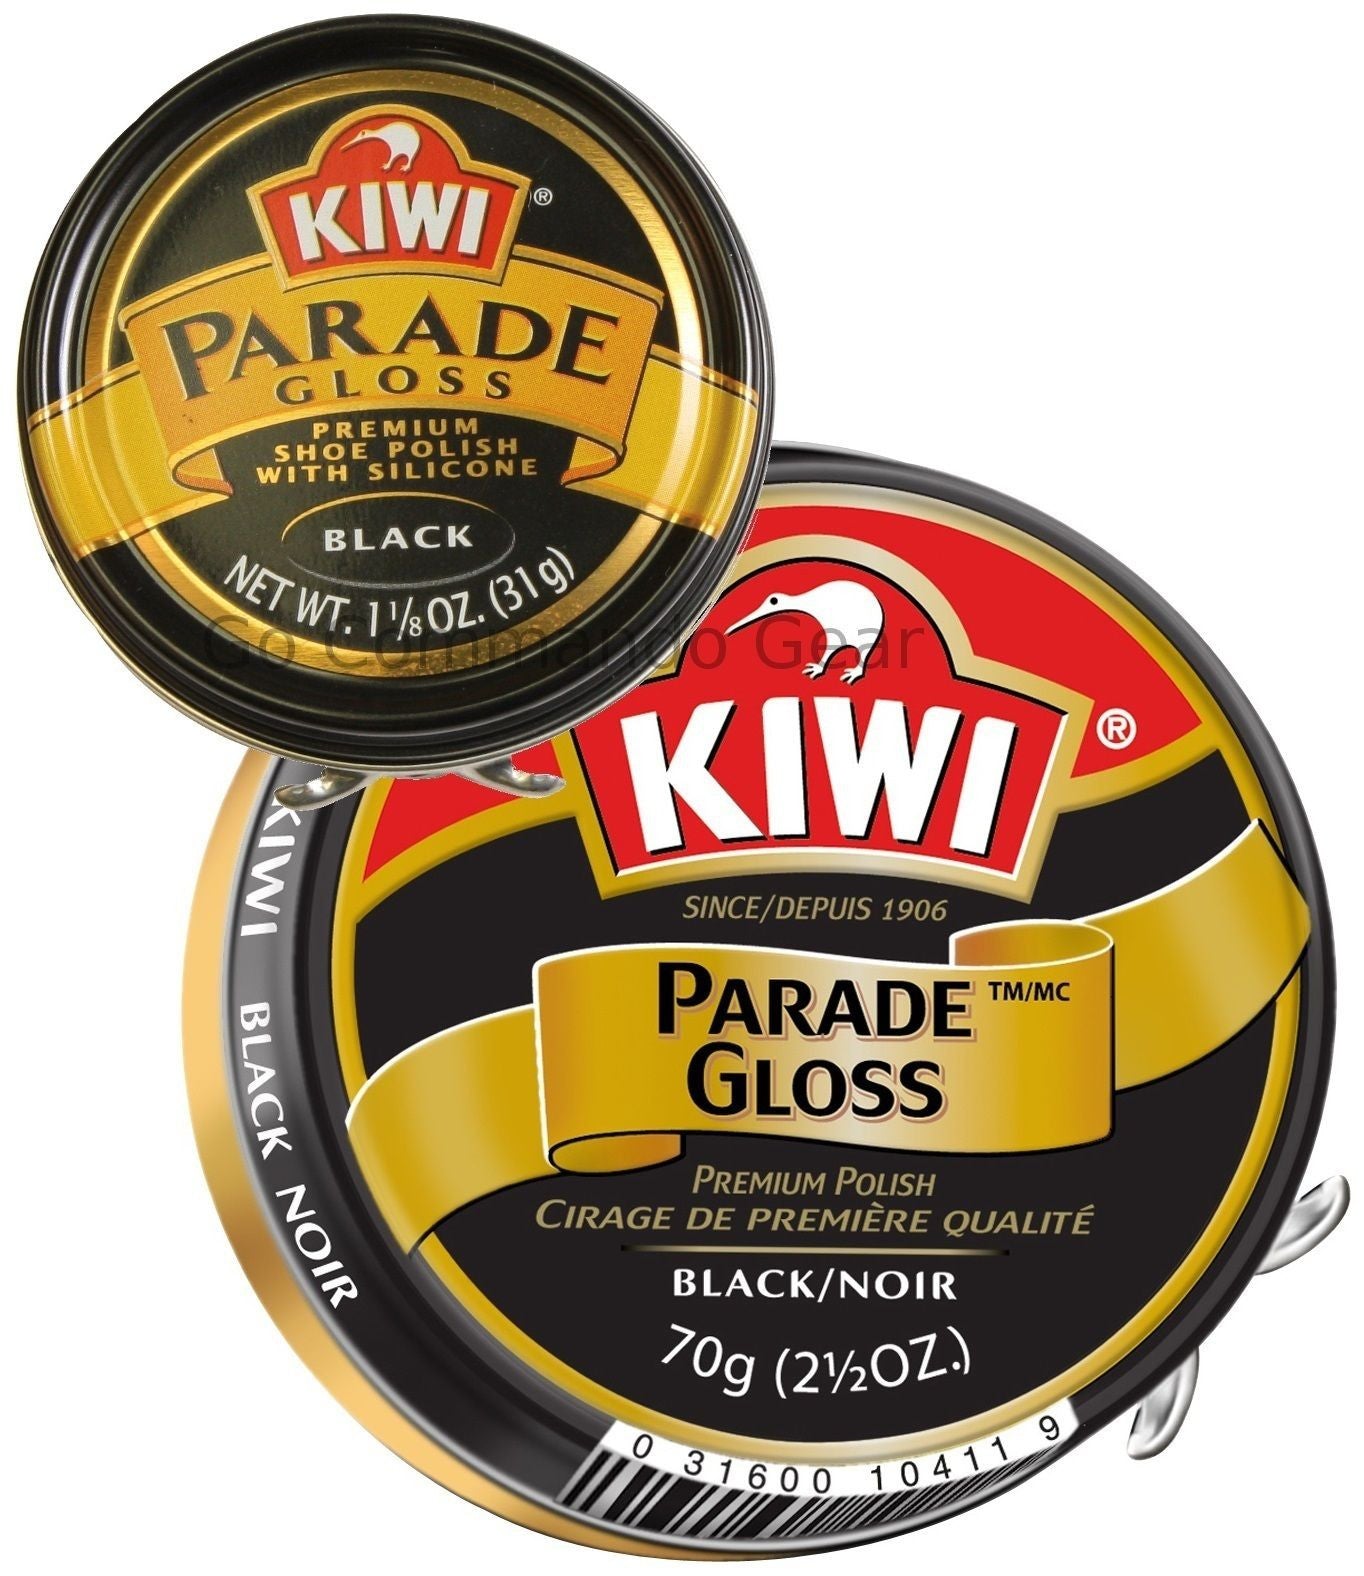 Kiwi Parade Gloss - Black Shoe Shine Polish - 70 & 31 Gram Tins Sizes - US Made